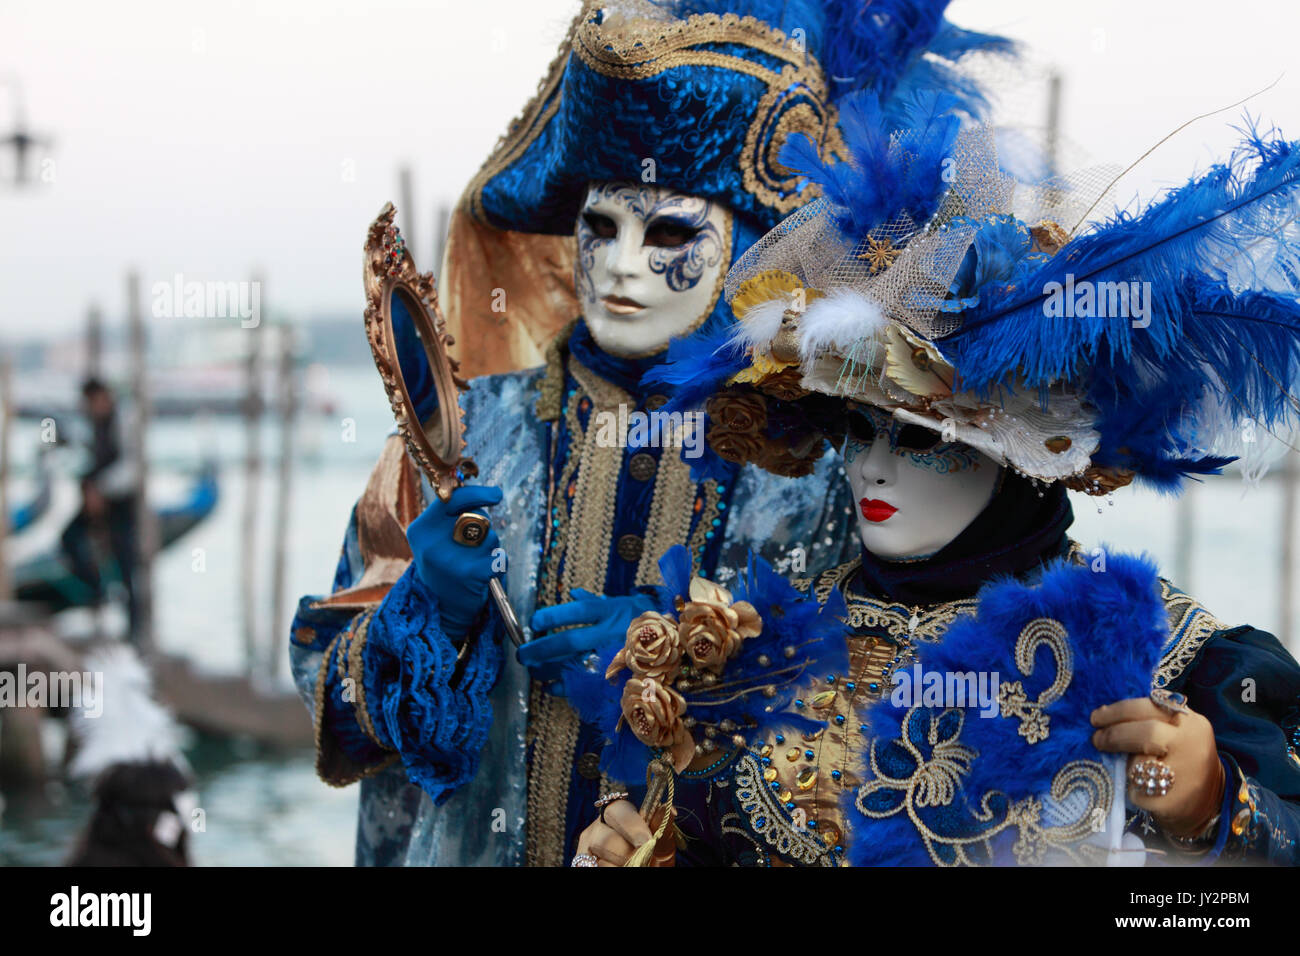 Venedig, Italien, 26. Februar 2011: Zwei Venezianische Masken in der Nähe der Port des Pagode in Piazza San Marco in Venedig im Karneval Tage posieren. Selektive Schwerpunkte Stockfoto